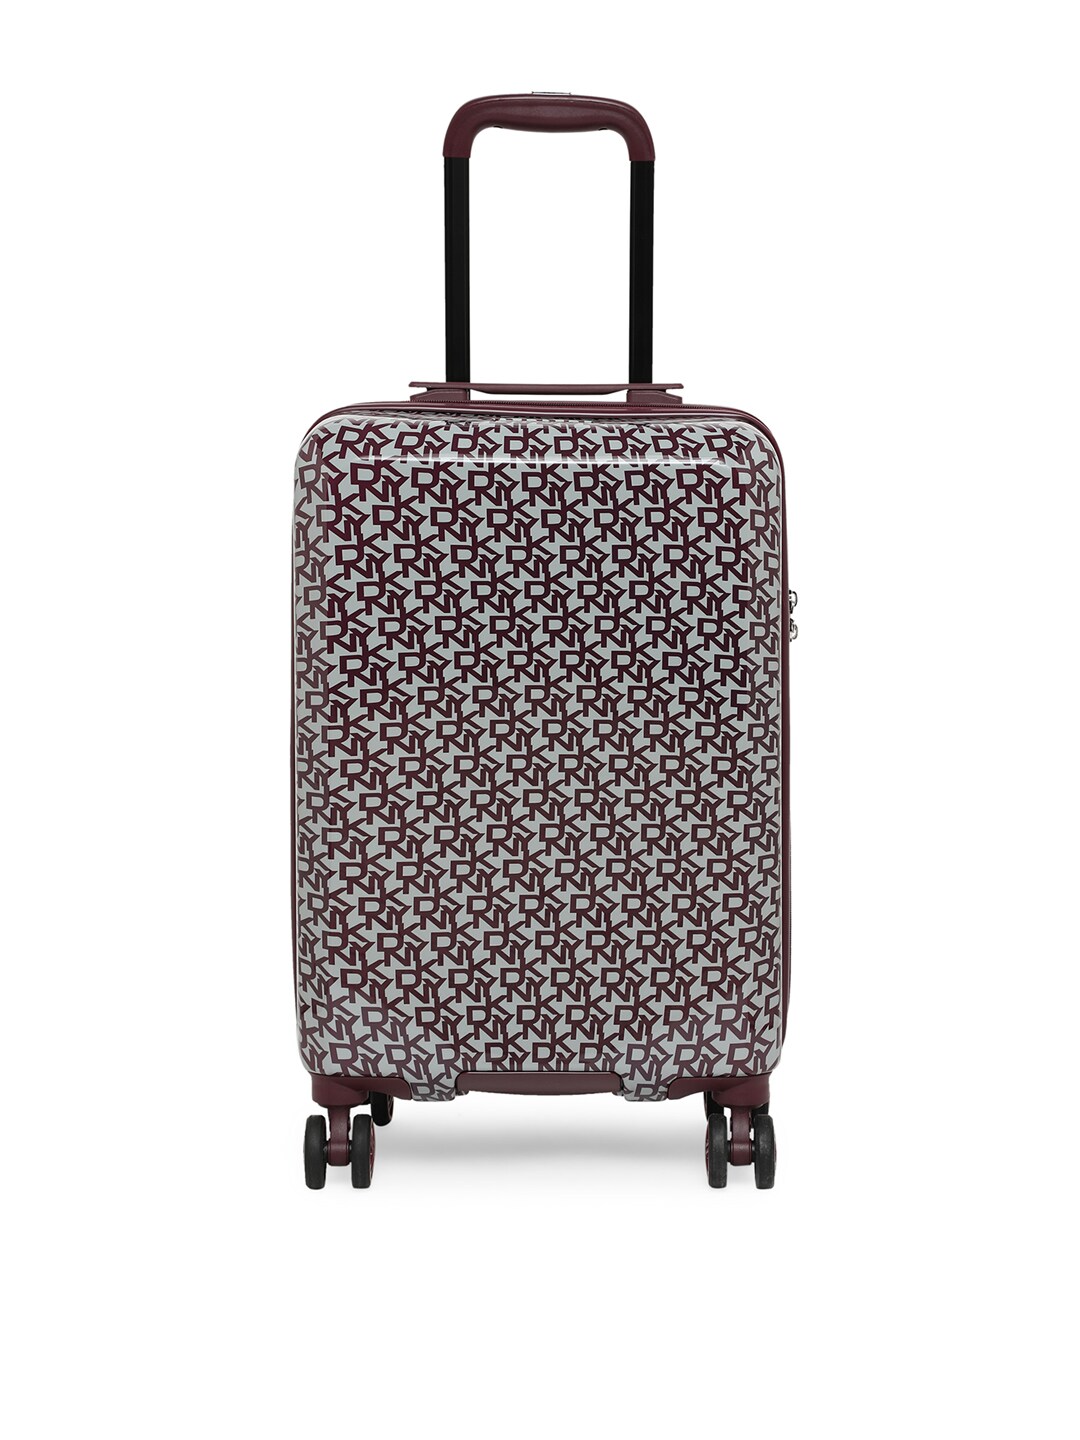 DKNY VINTAGE SIGNATURE Range Graphite & Cordavan Color Hard Cabin Luggage Price in India